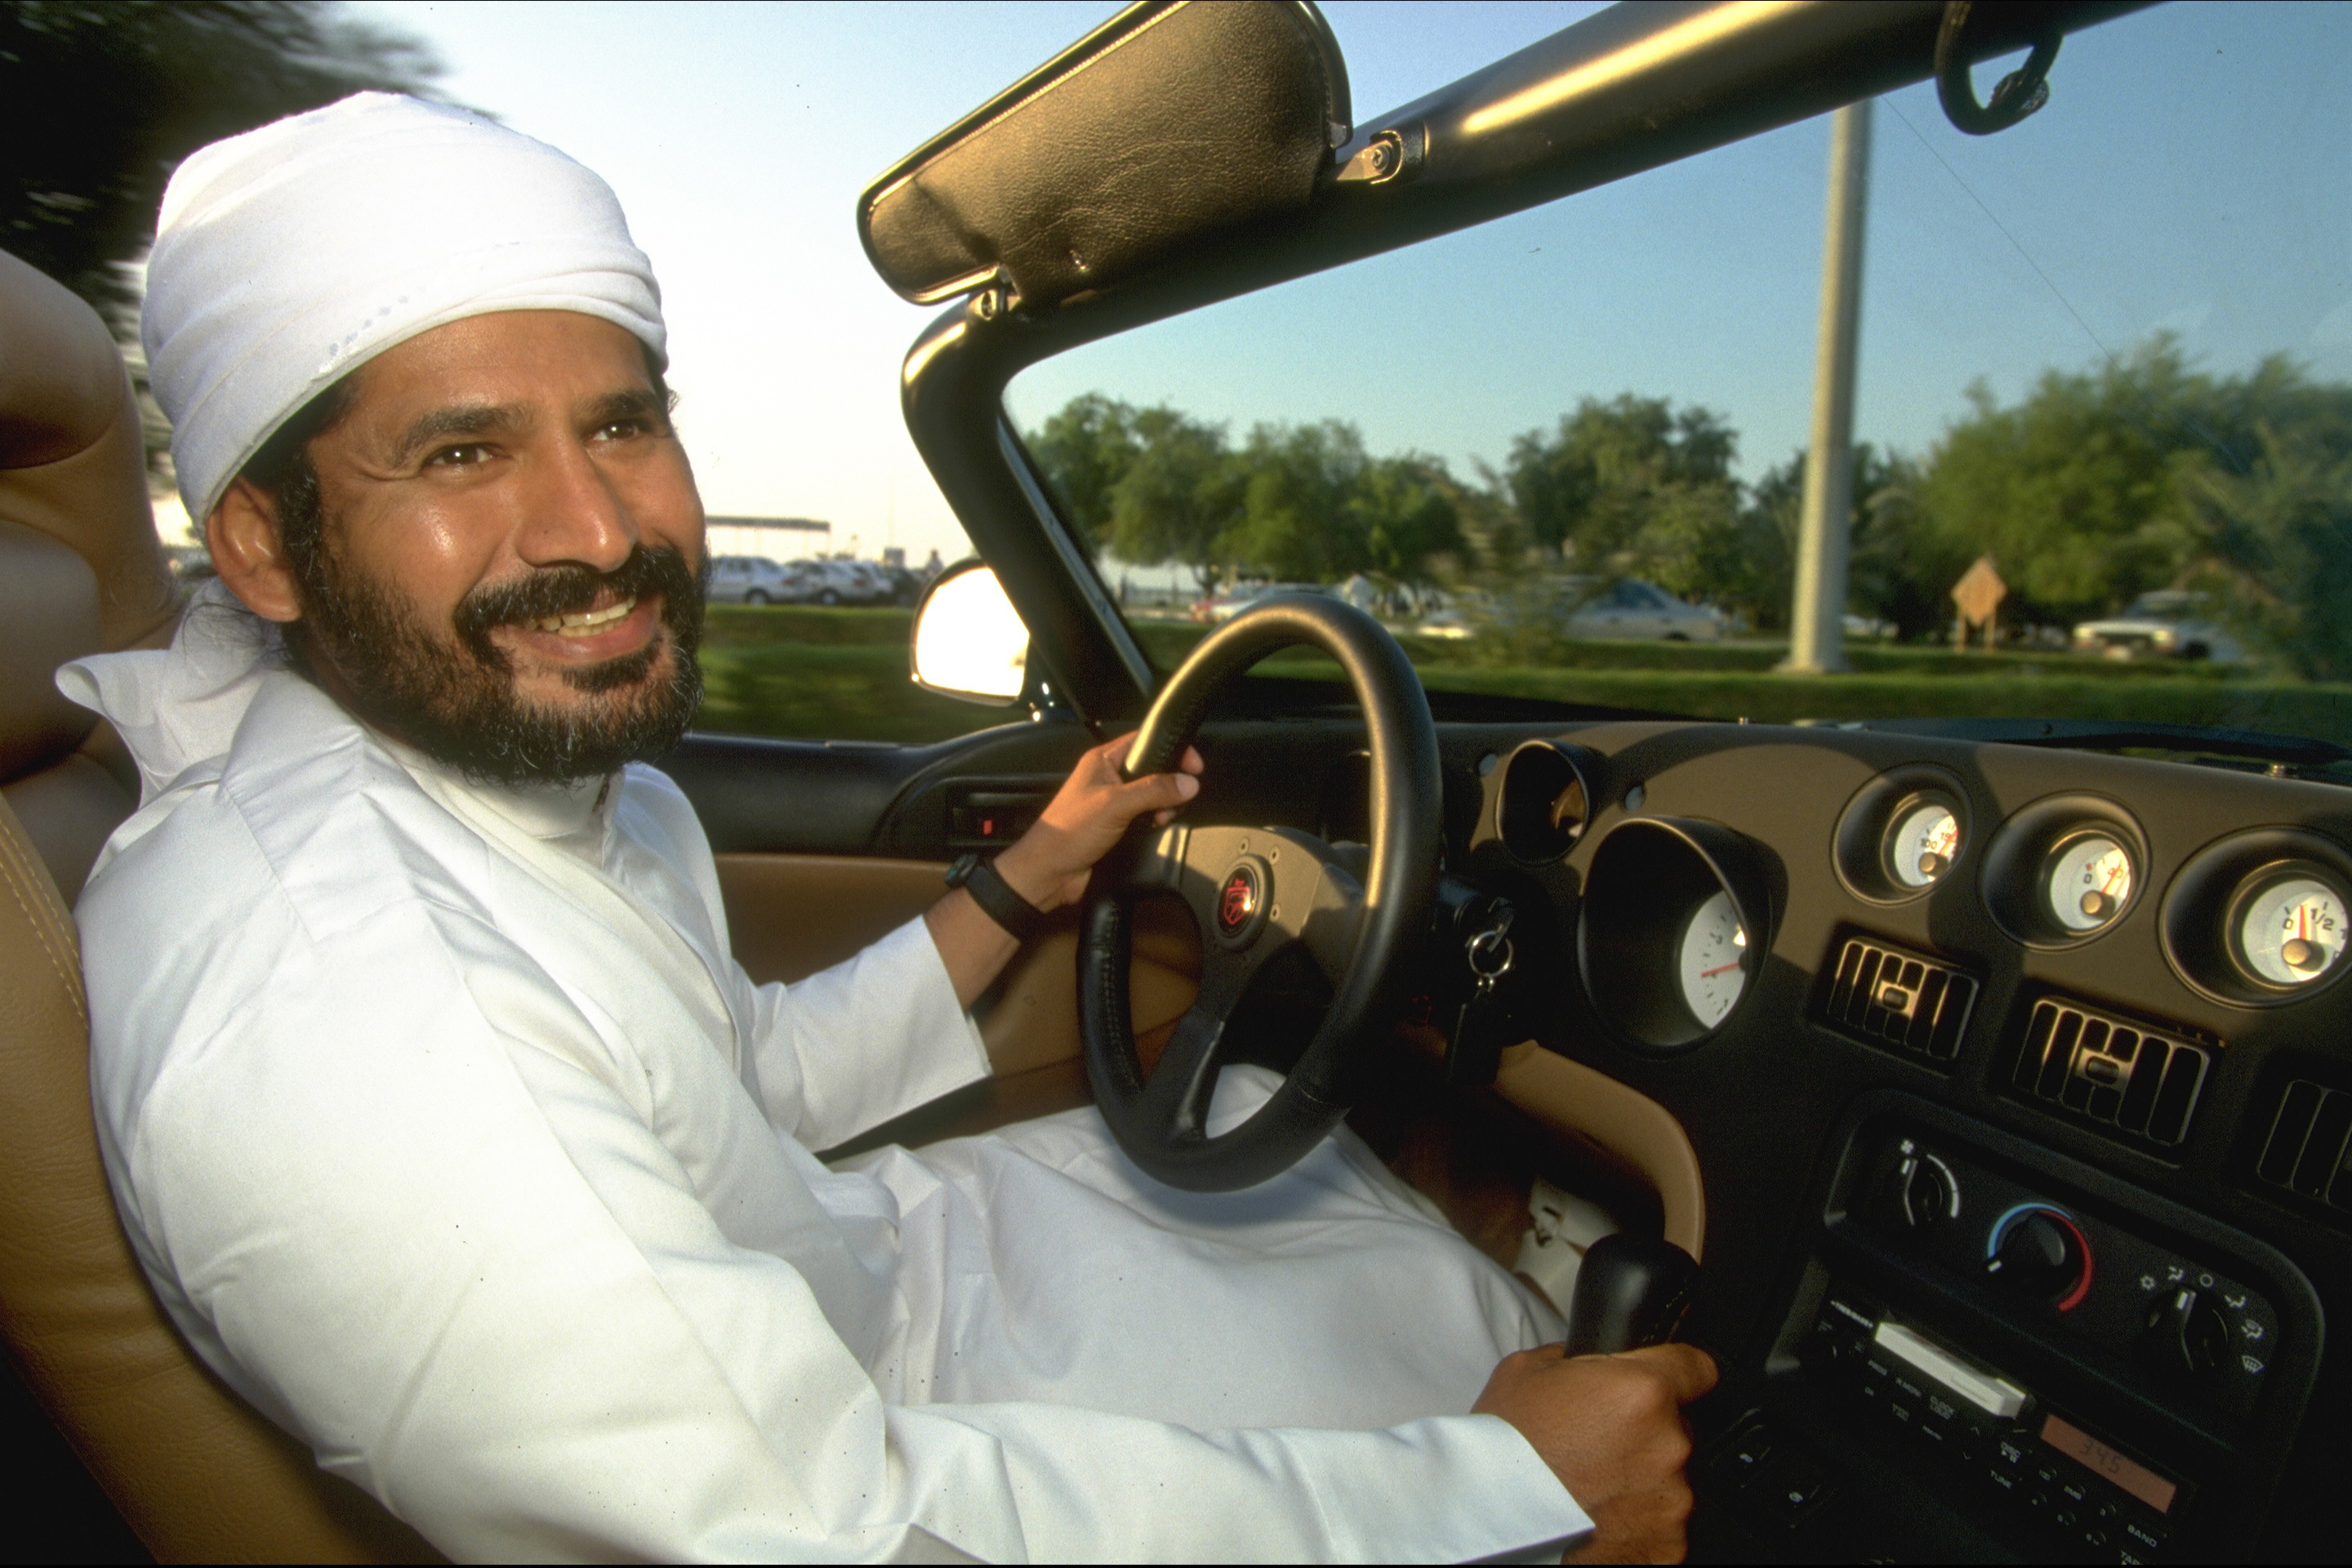 Hamad bin Hamdan Al Nahyan: What Is His Net Worth? | Money